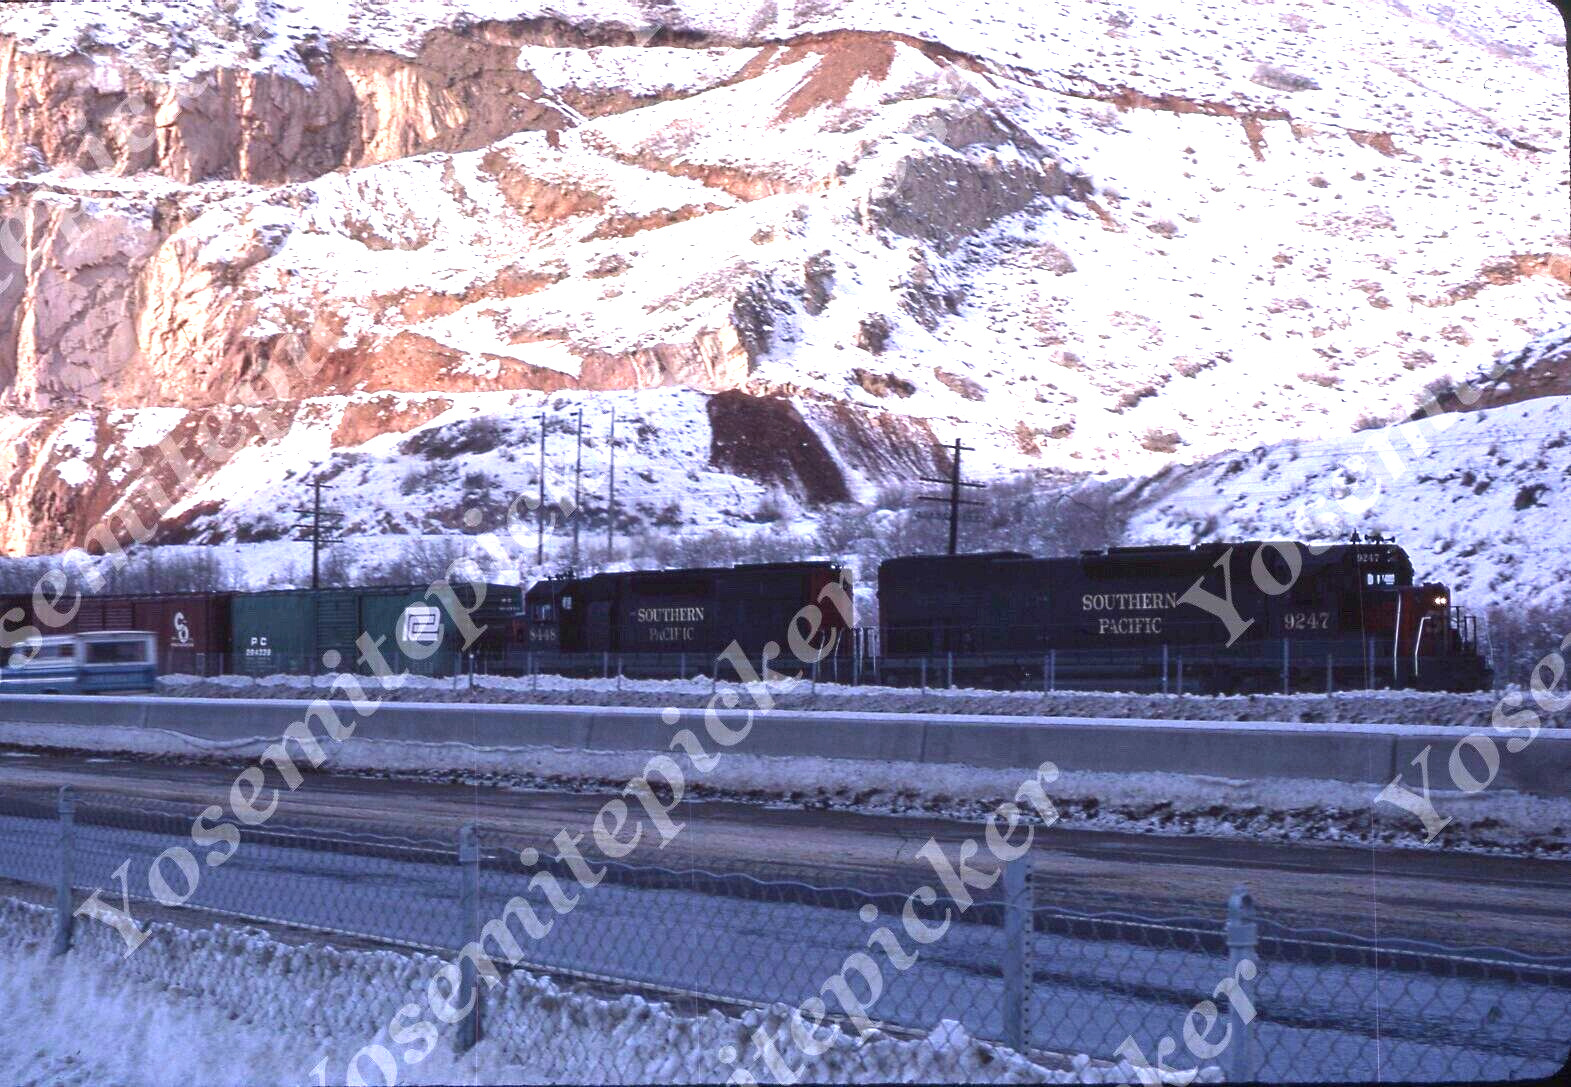 sl53 Original Slide 1973 Utah Southern Pacific railroad train 449a